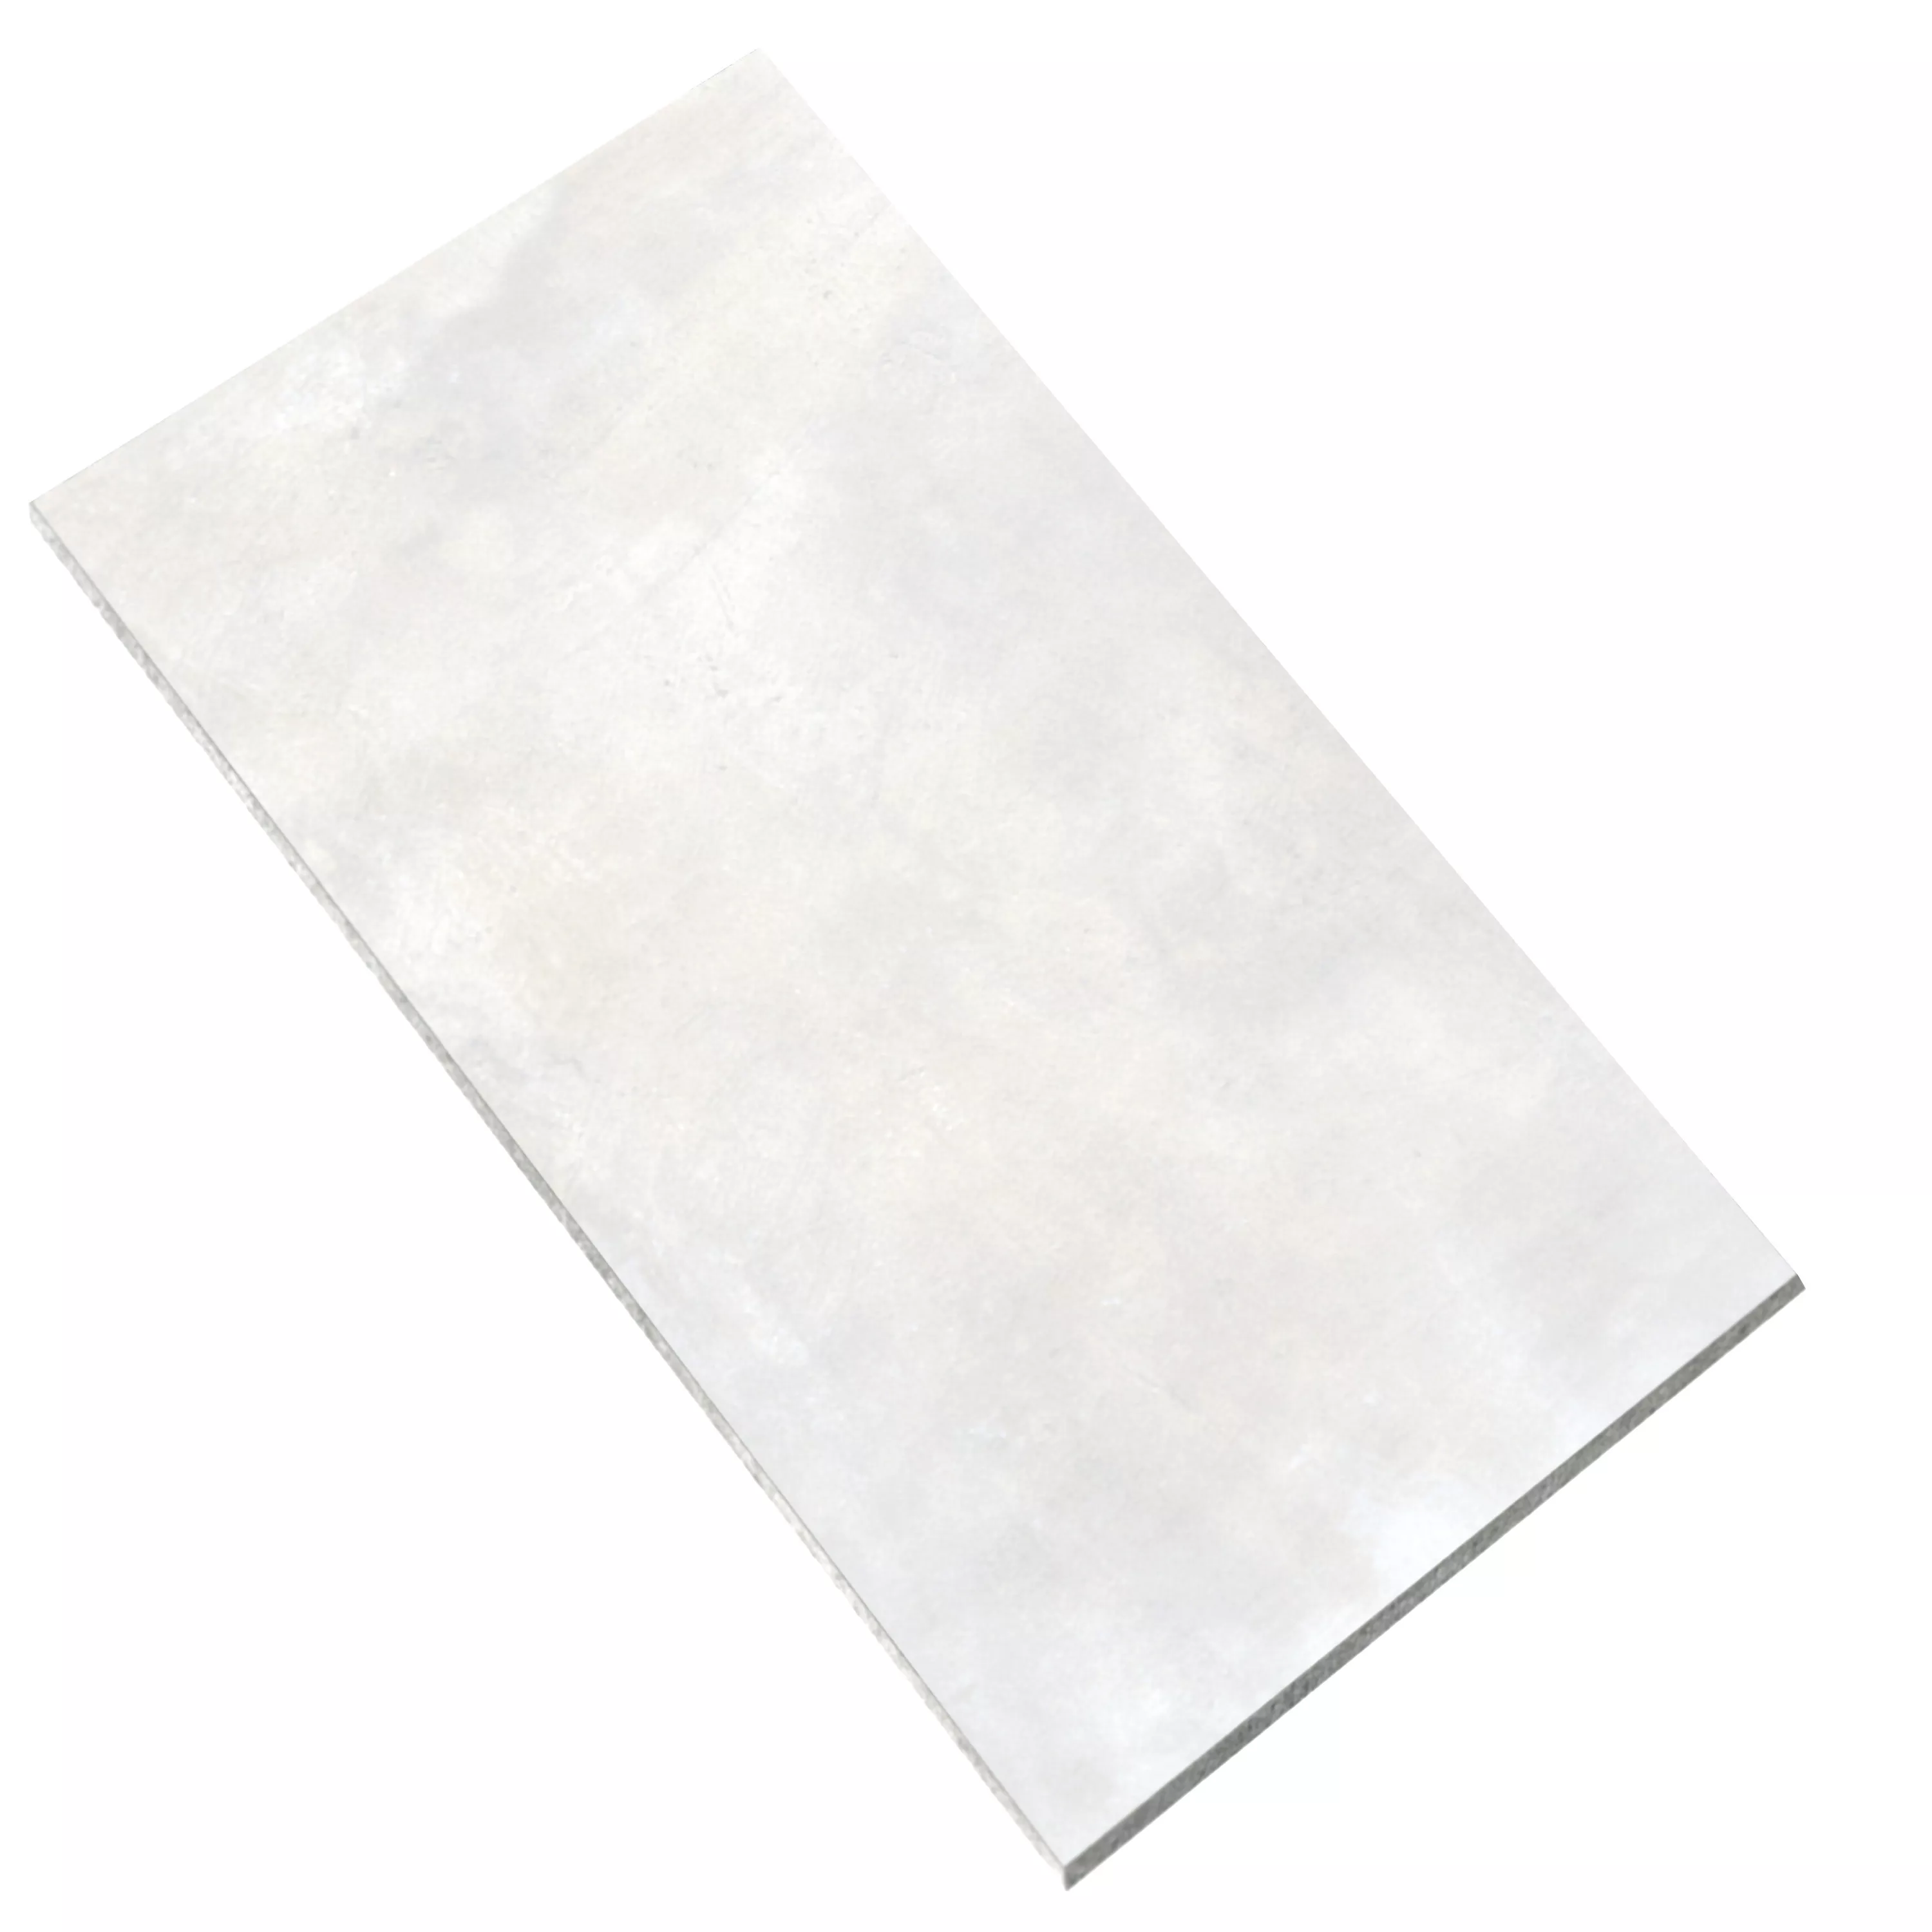 Vzorek Podlahové Dlaždice Freeland Kámen Vzhled R10/B Bílá 30x60cm